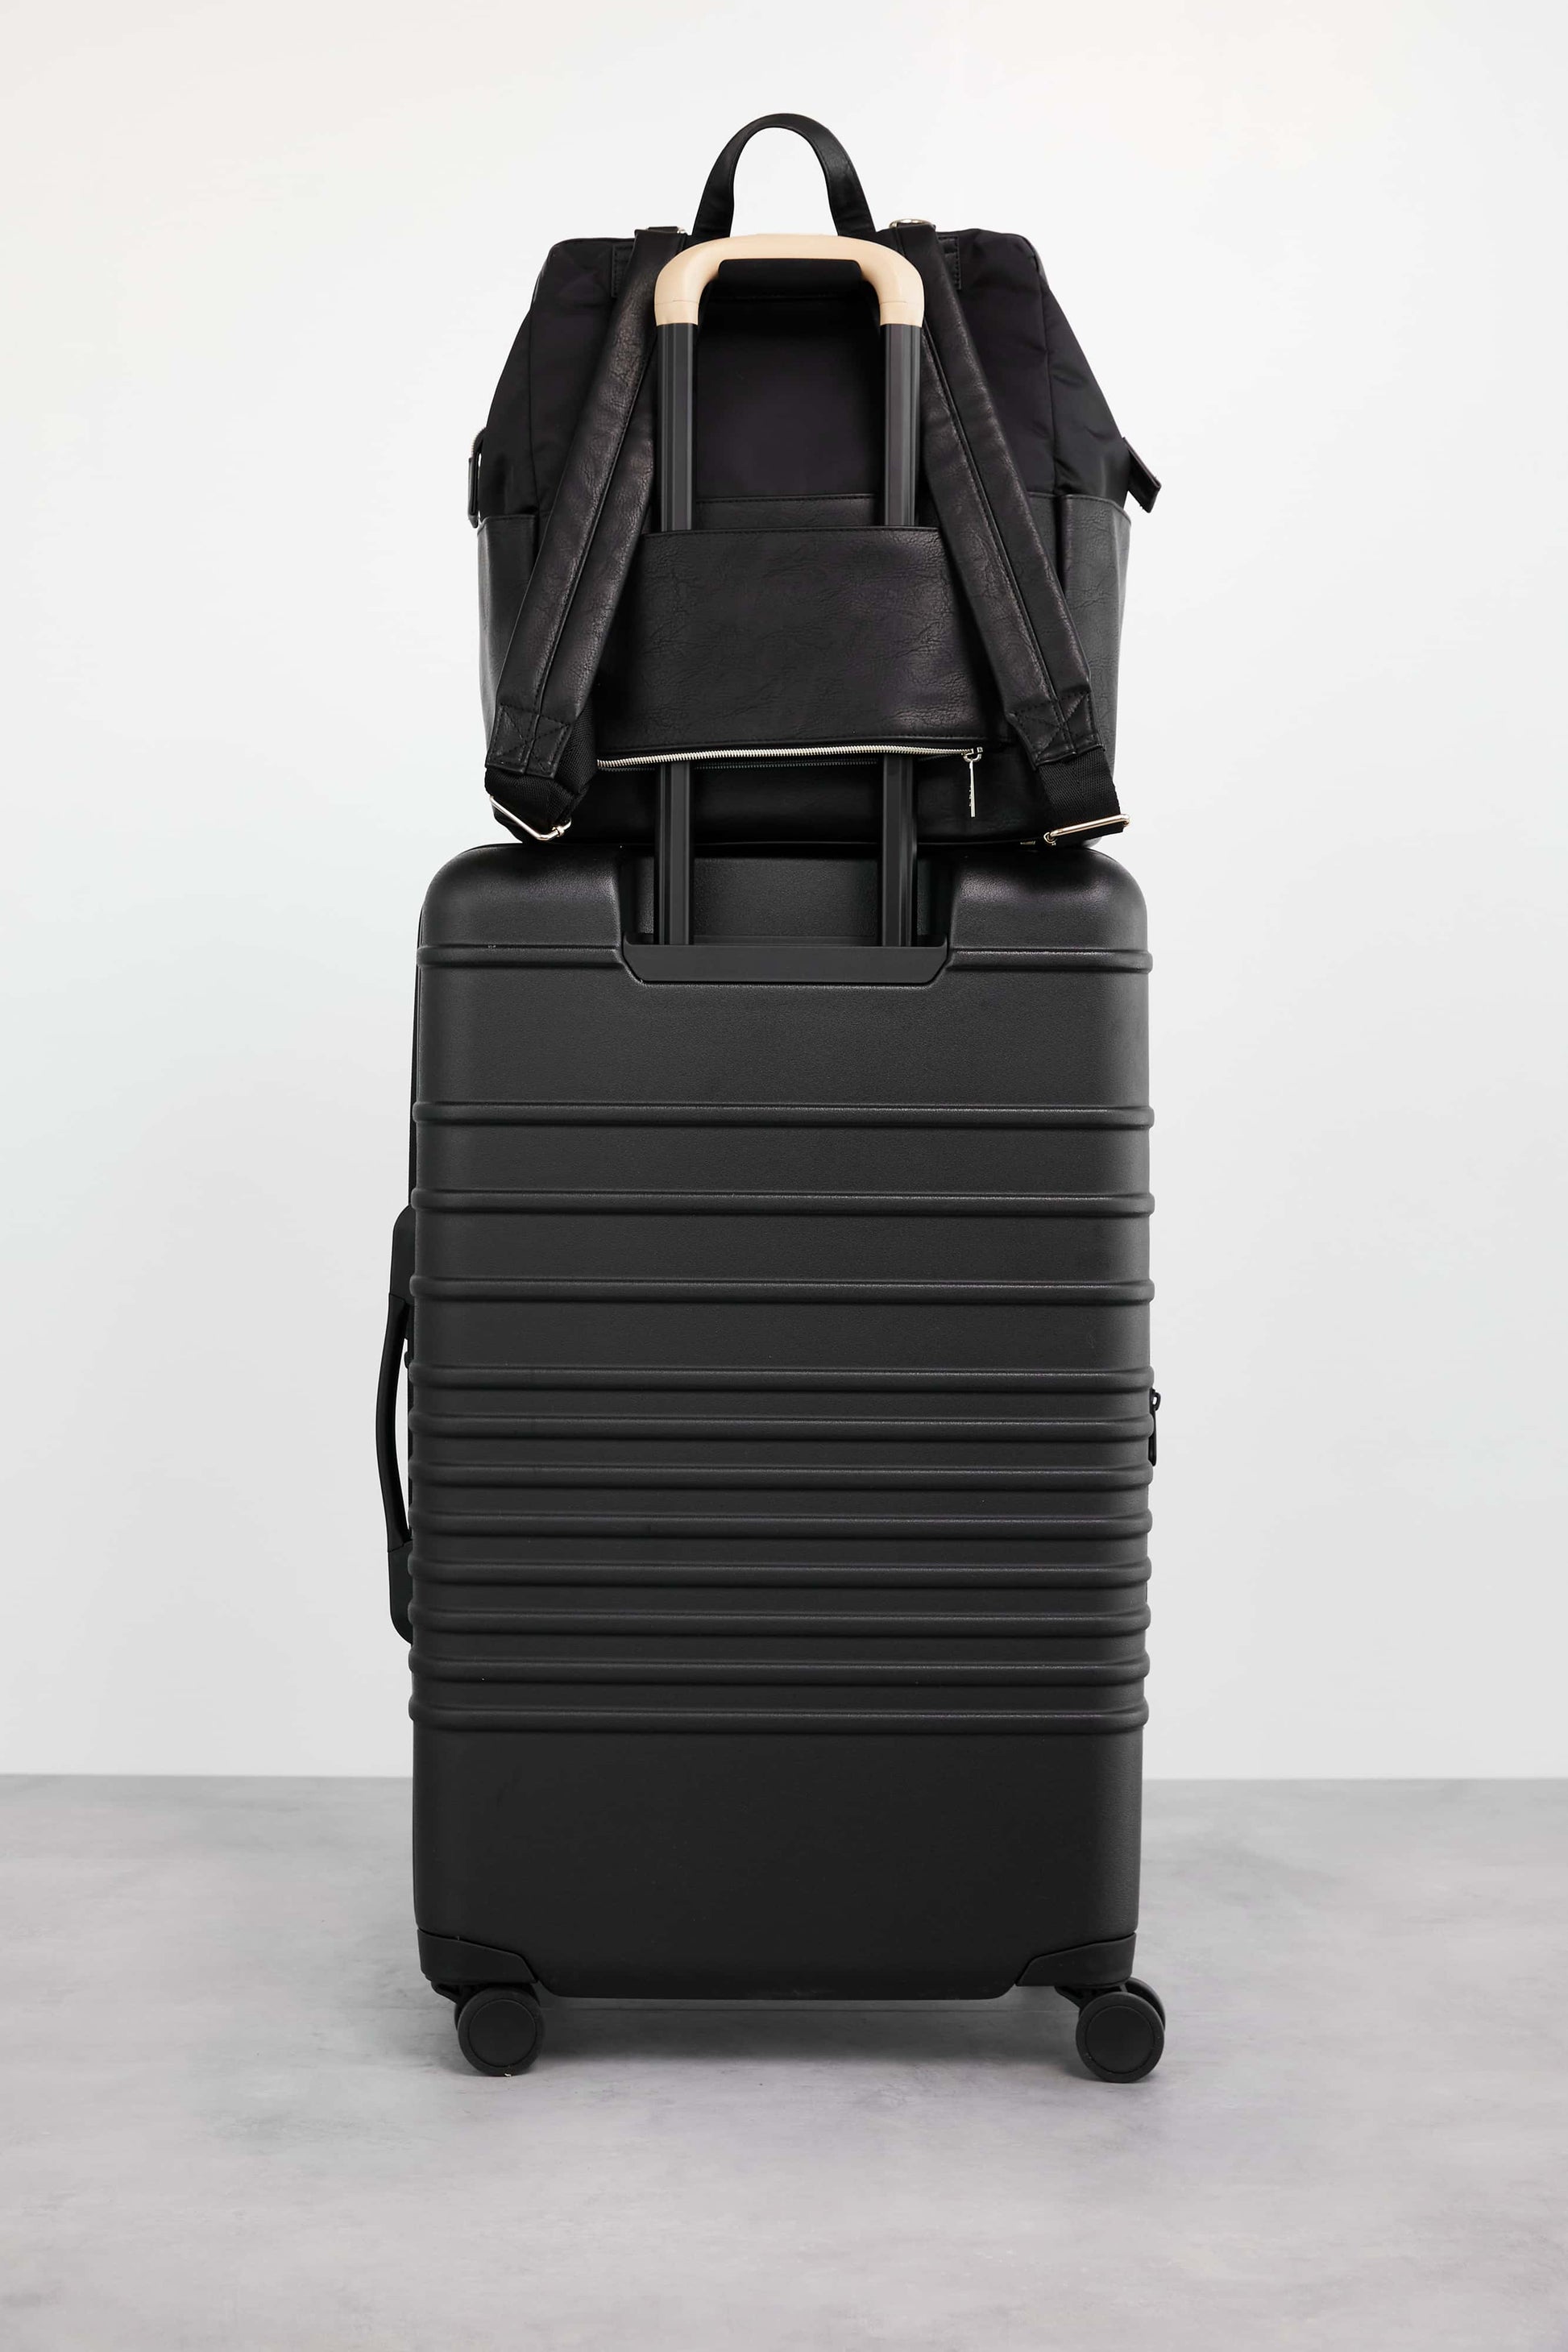 Backpack Diaper Bag Black Trolley Sleeve Luggage Stack 